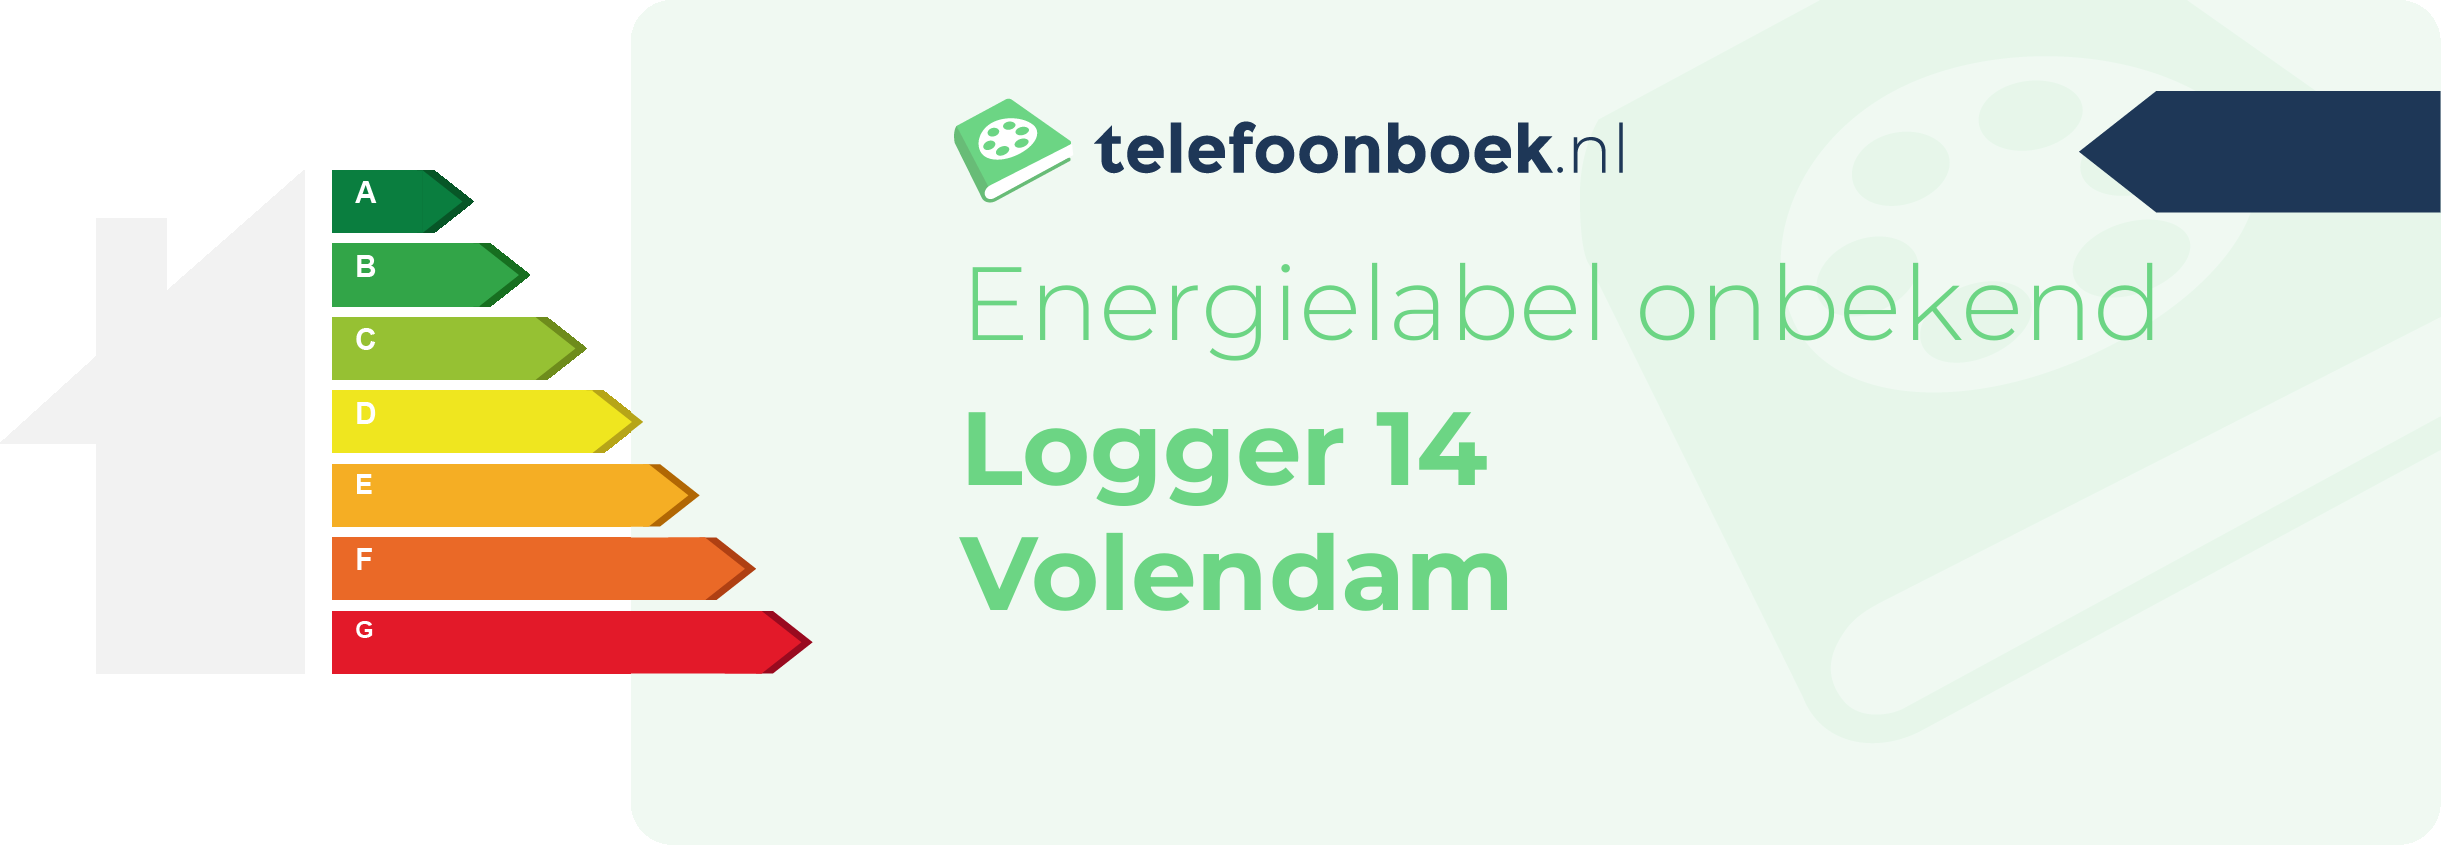 Energielabel Logger 14 Volendam